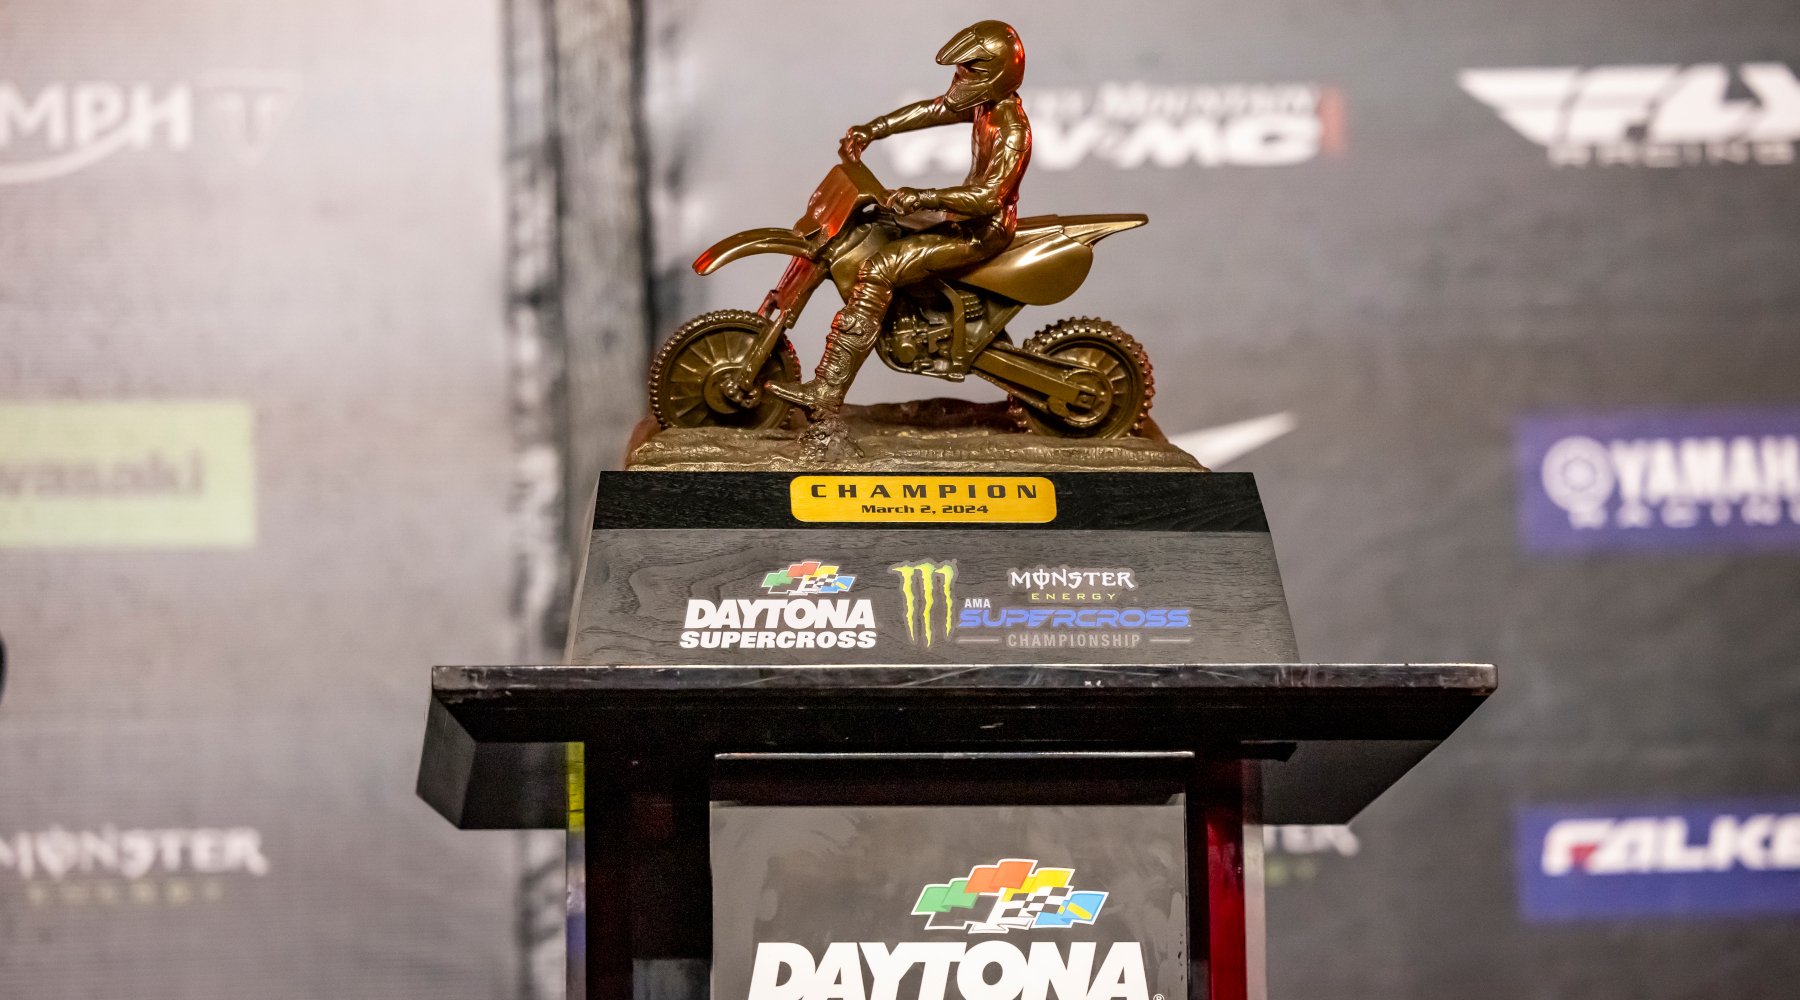 Daytona Supercross trophy